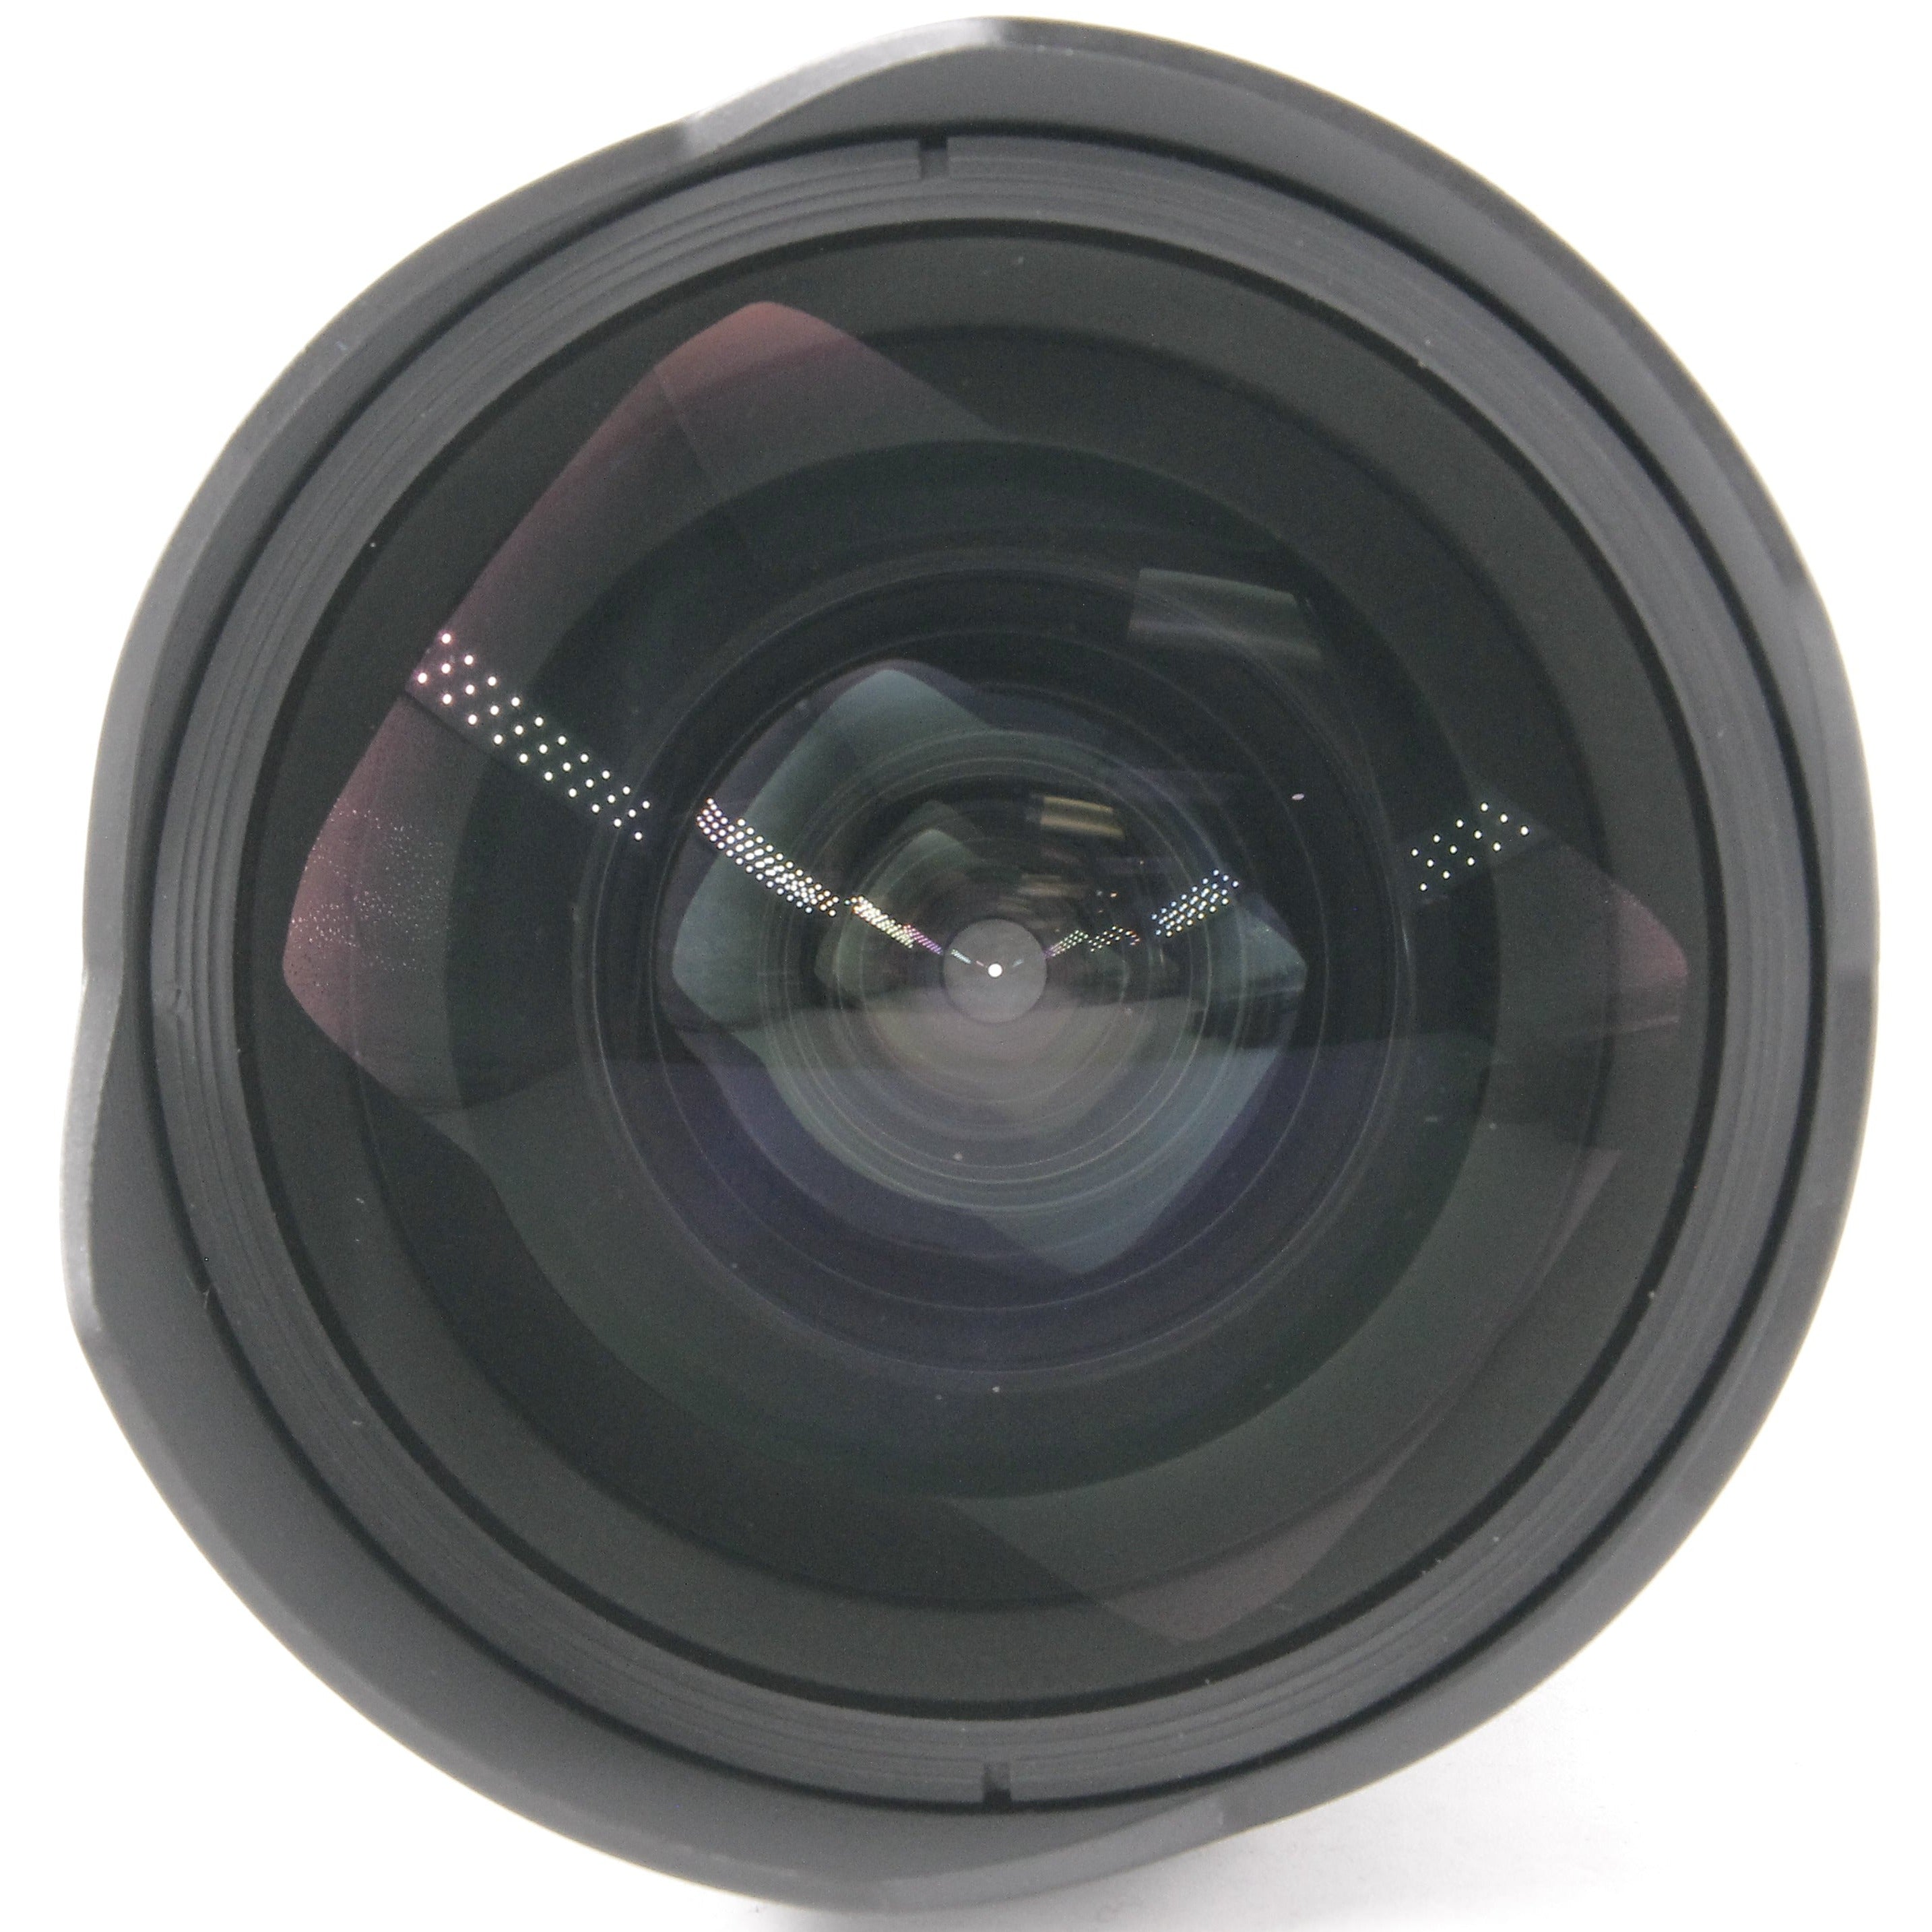 *** USED ***  Nikon AF-S Nikkor 14-24mm f/2.8G ED ED IF Lens with Box